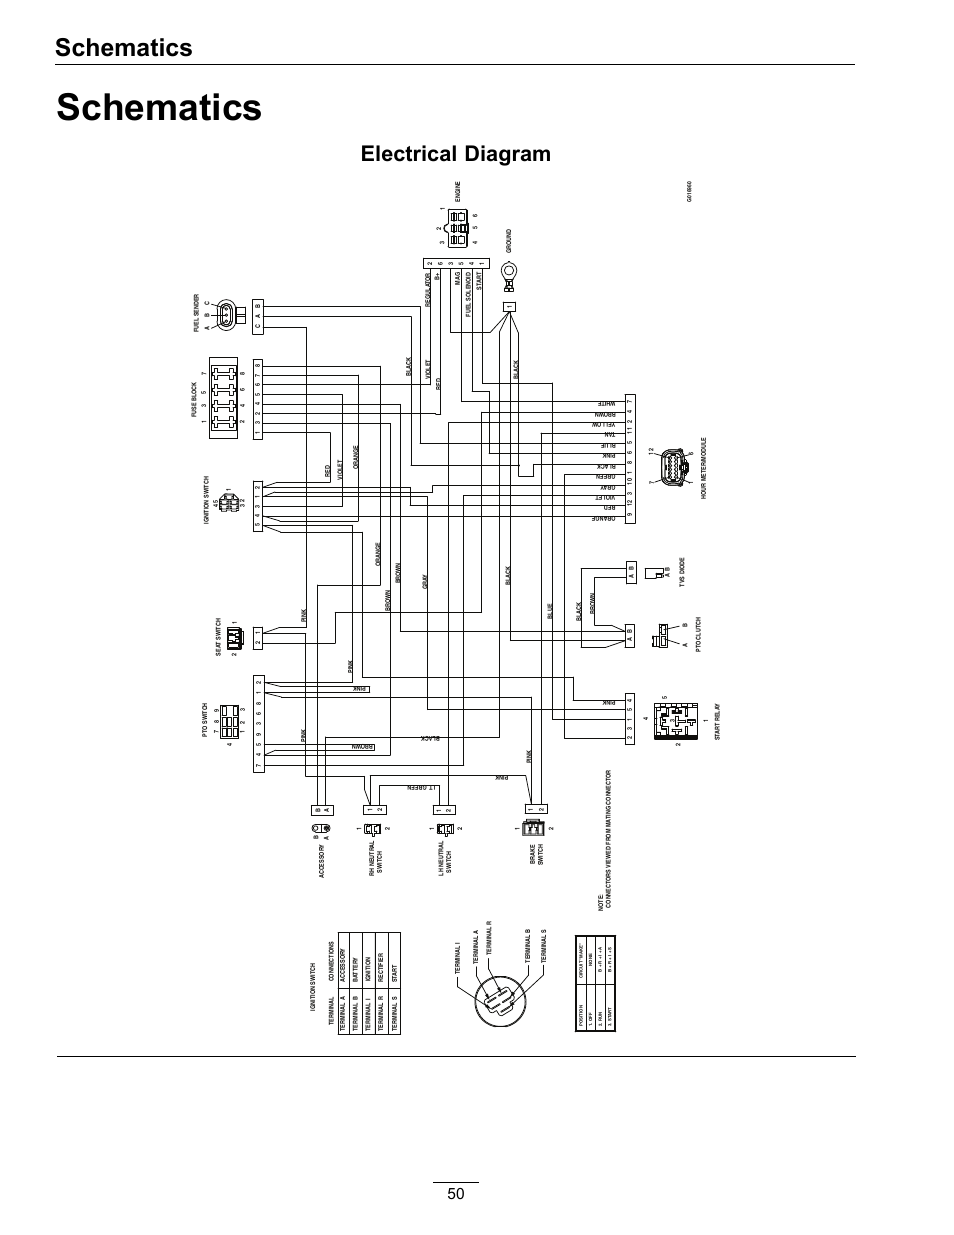 Schematics, Electrical diagram | Exmark lazer Z E-Series 312 User Manual | Page 50 / 60